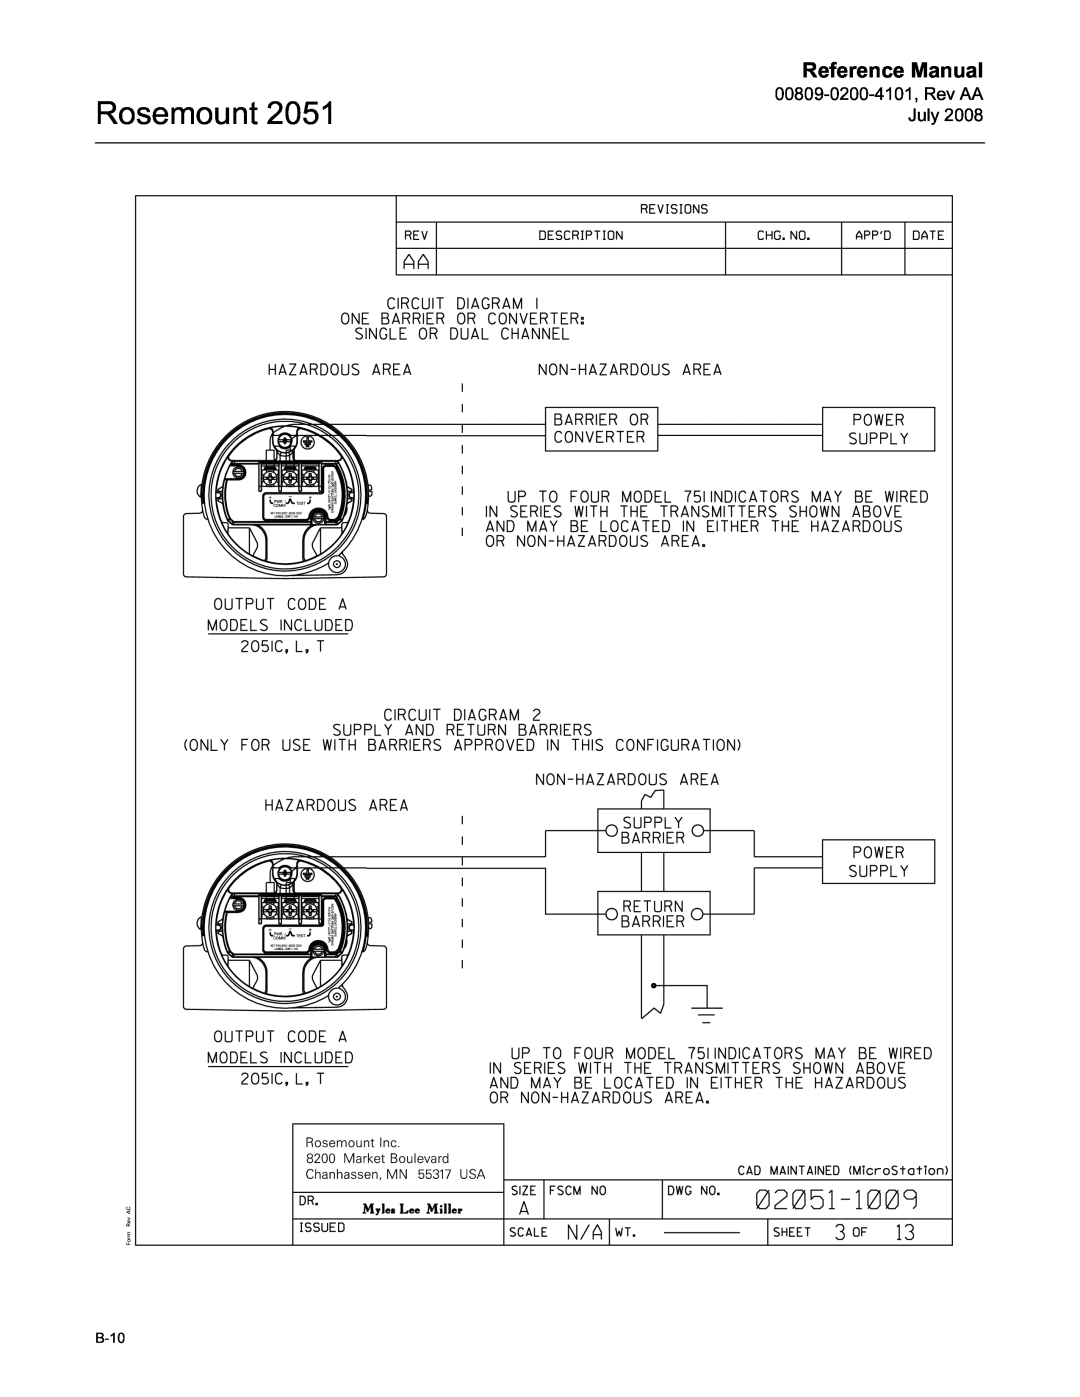 Emerson Process Management 2051 manual Rosemount, Reference Manual, B-10 